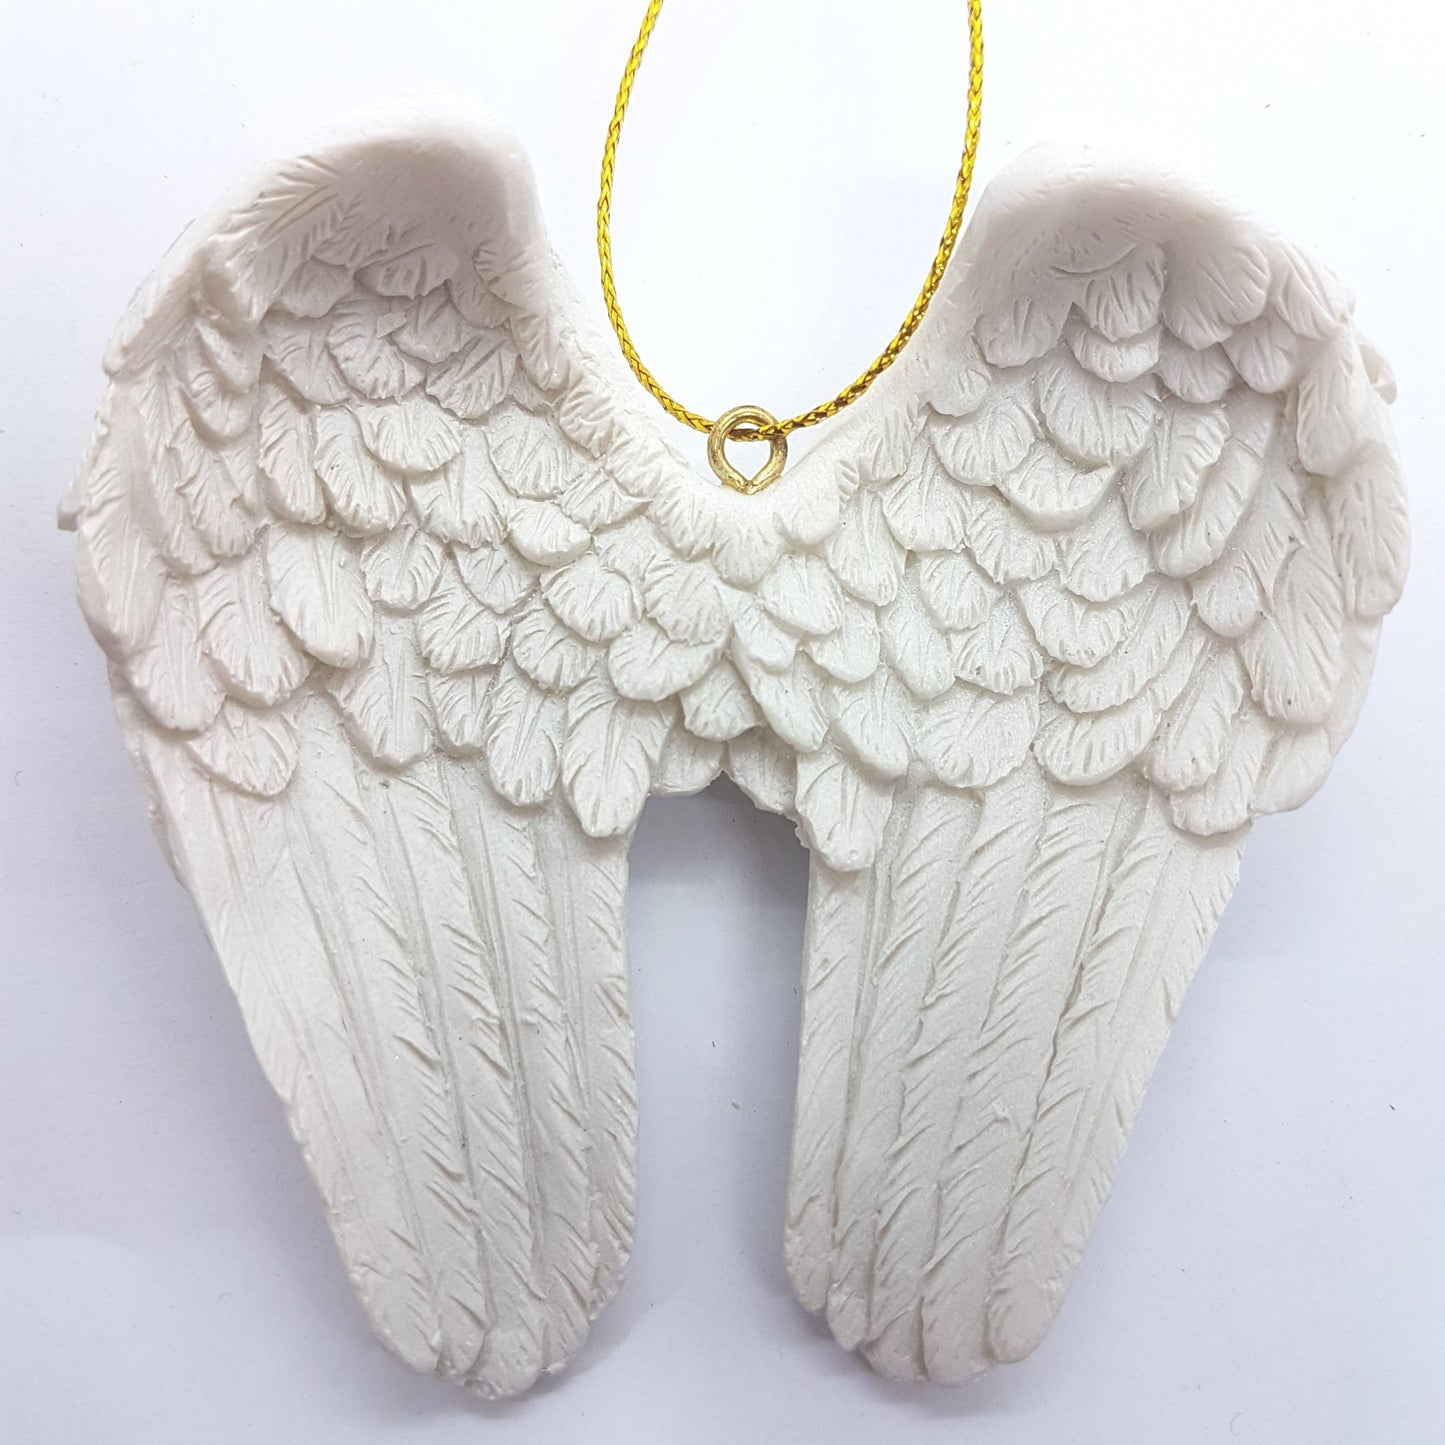 Ceramic Angel Wings